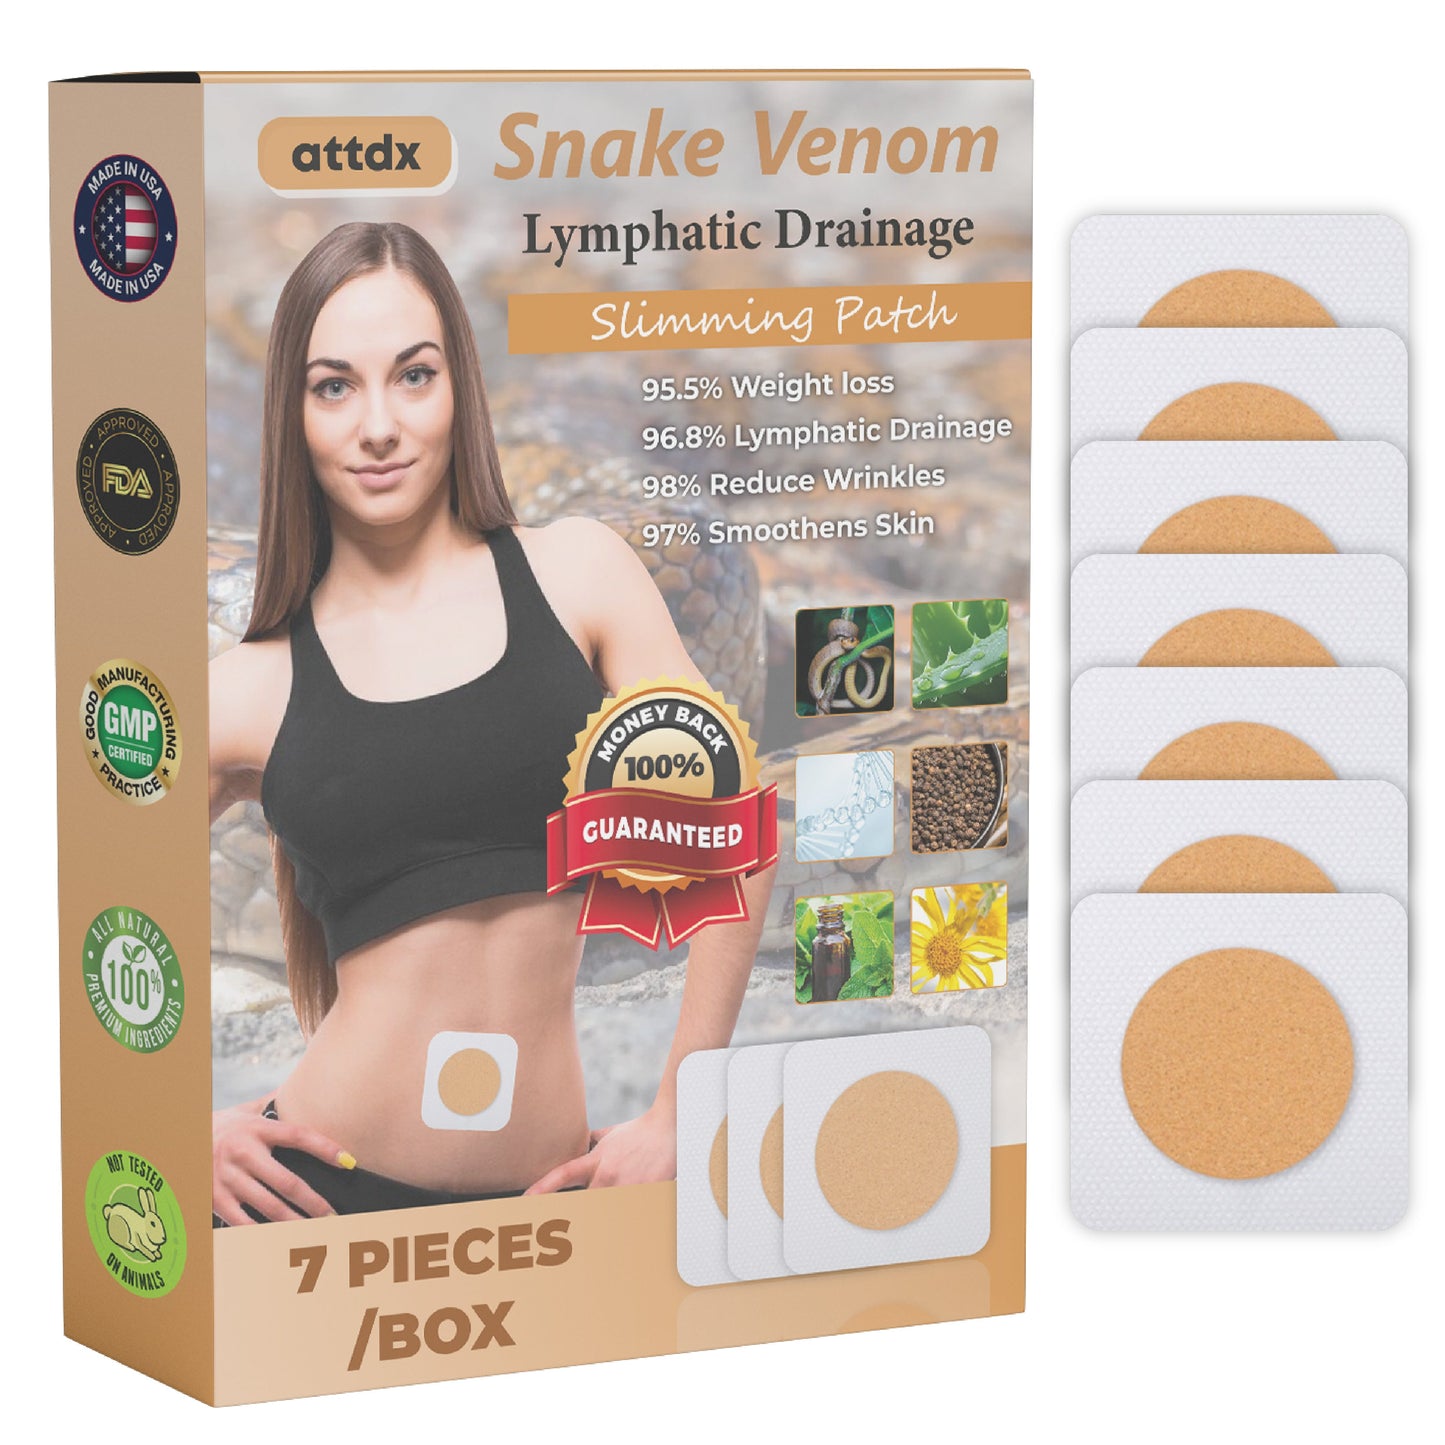 Snake Venom LymphaticDrainage SlimmingPatch Y